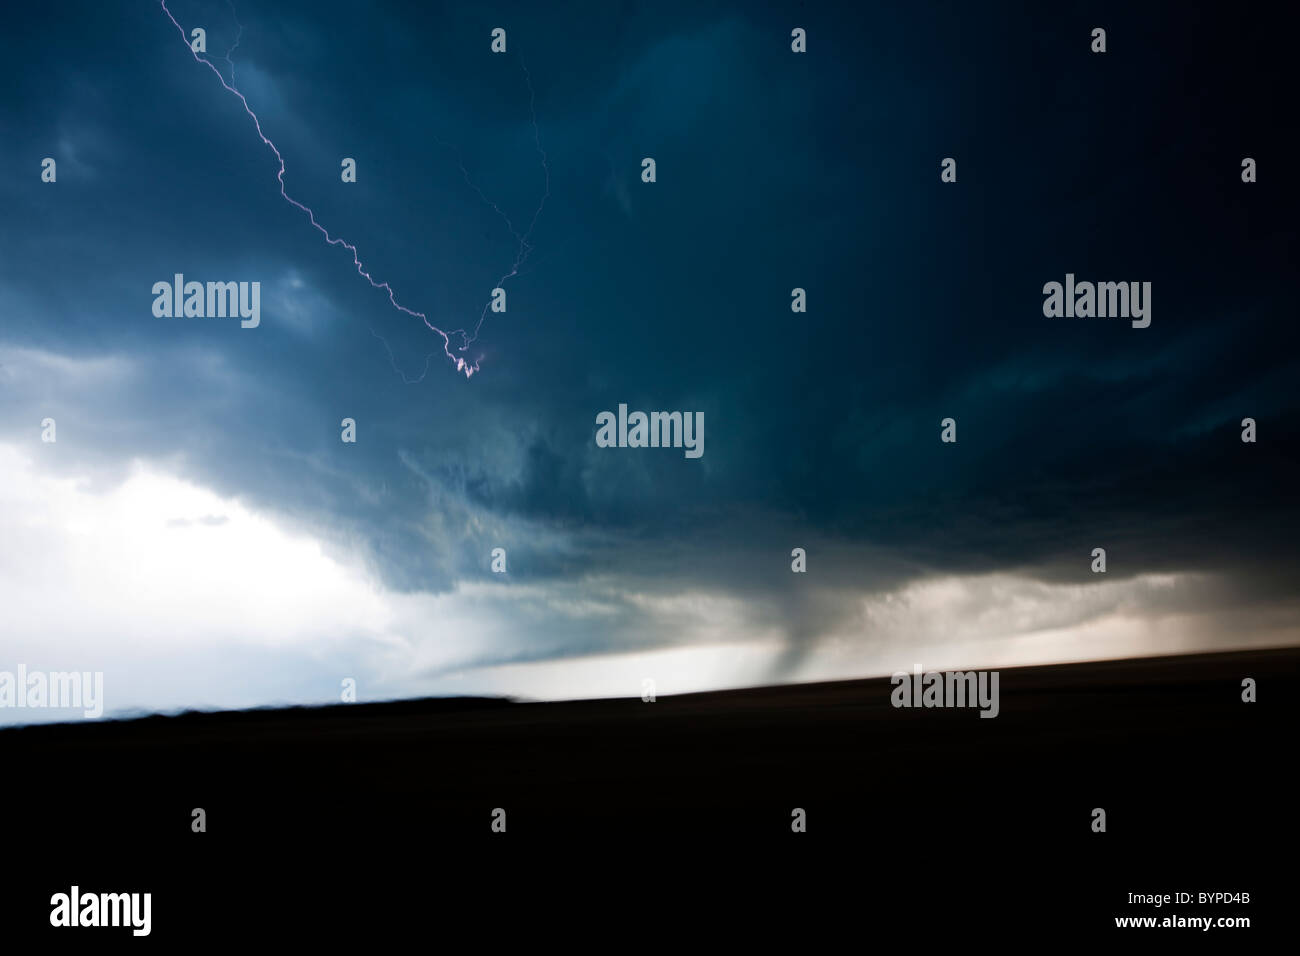 USA, South Dakota, Blurred image of lightning striking within dark clouds of summer thunderstorm on prairie Stock Photo